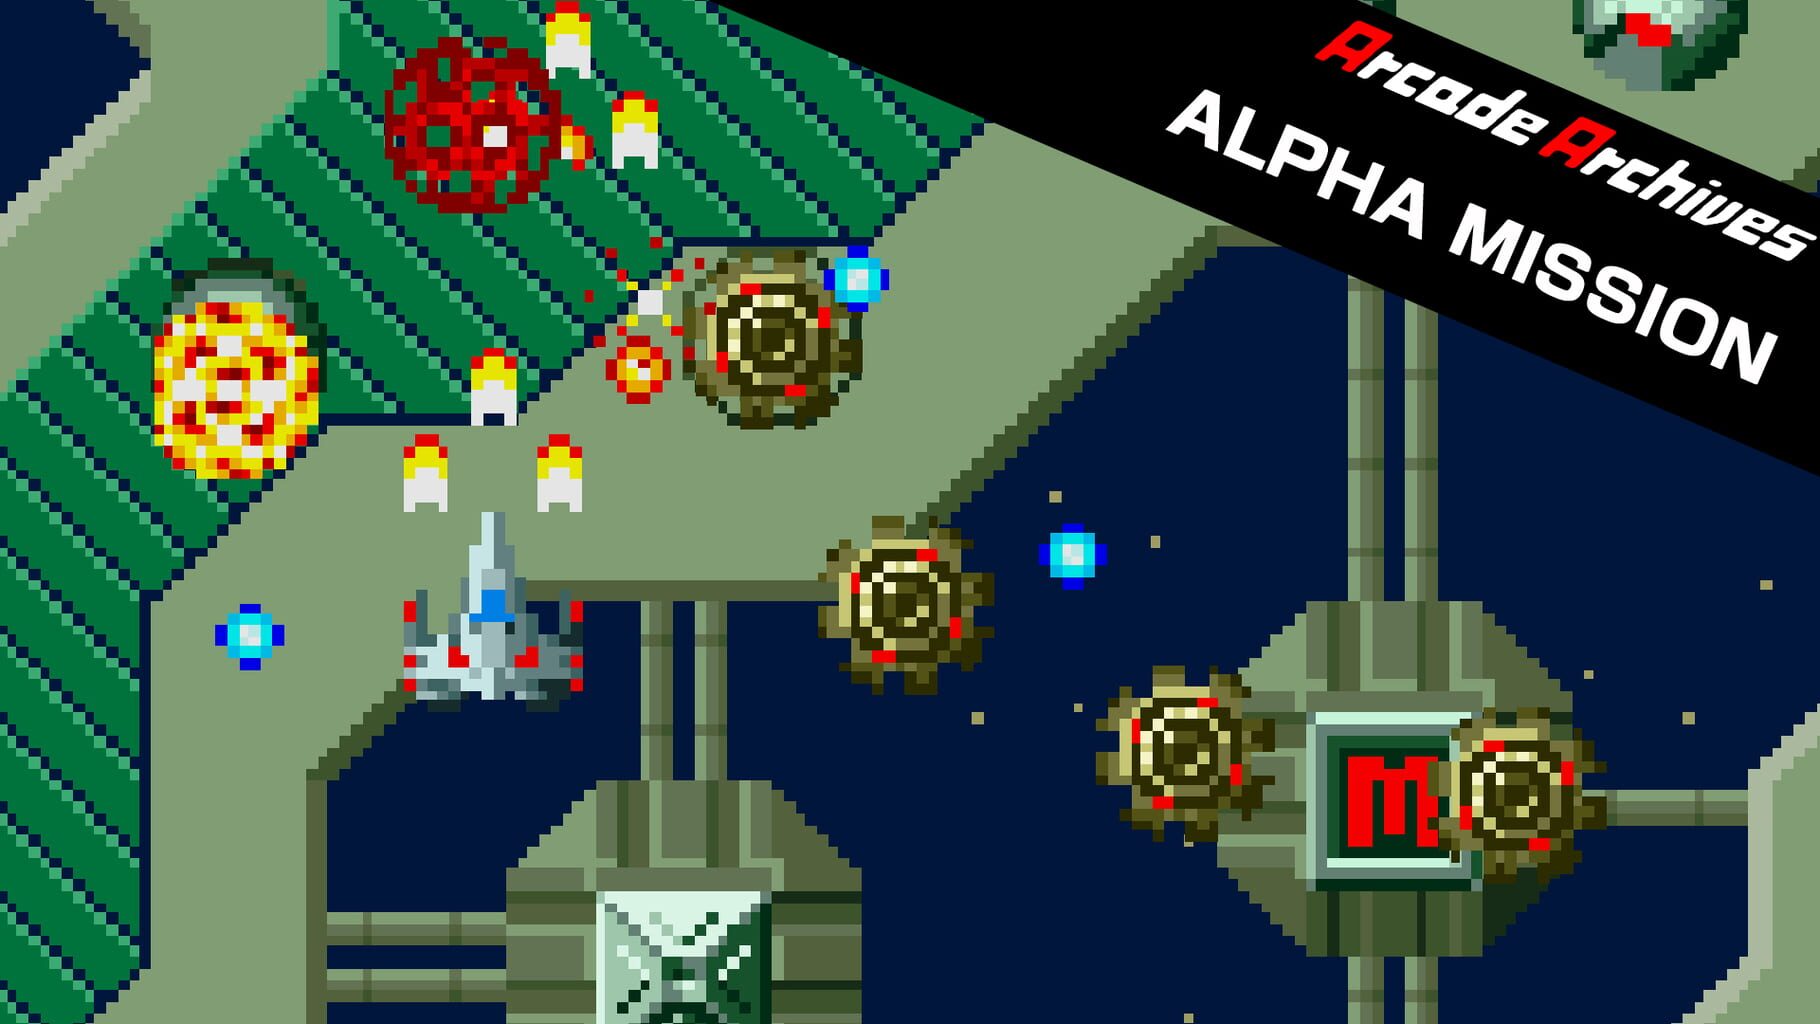 Arcade Archives: Alpha Mission artwork